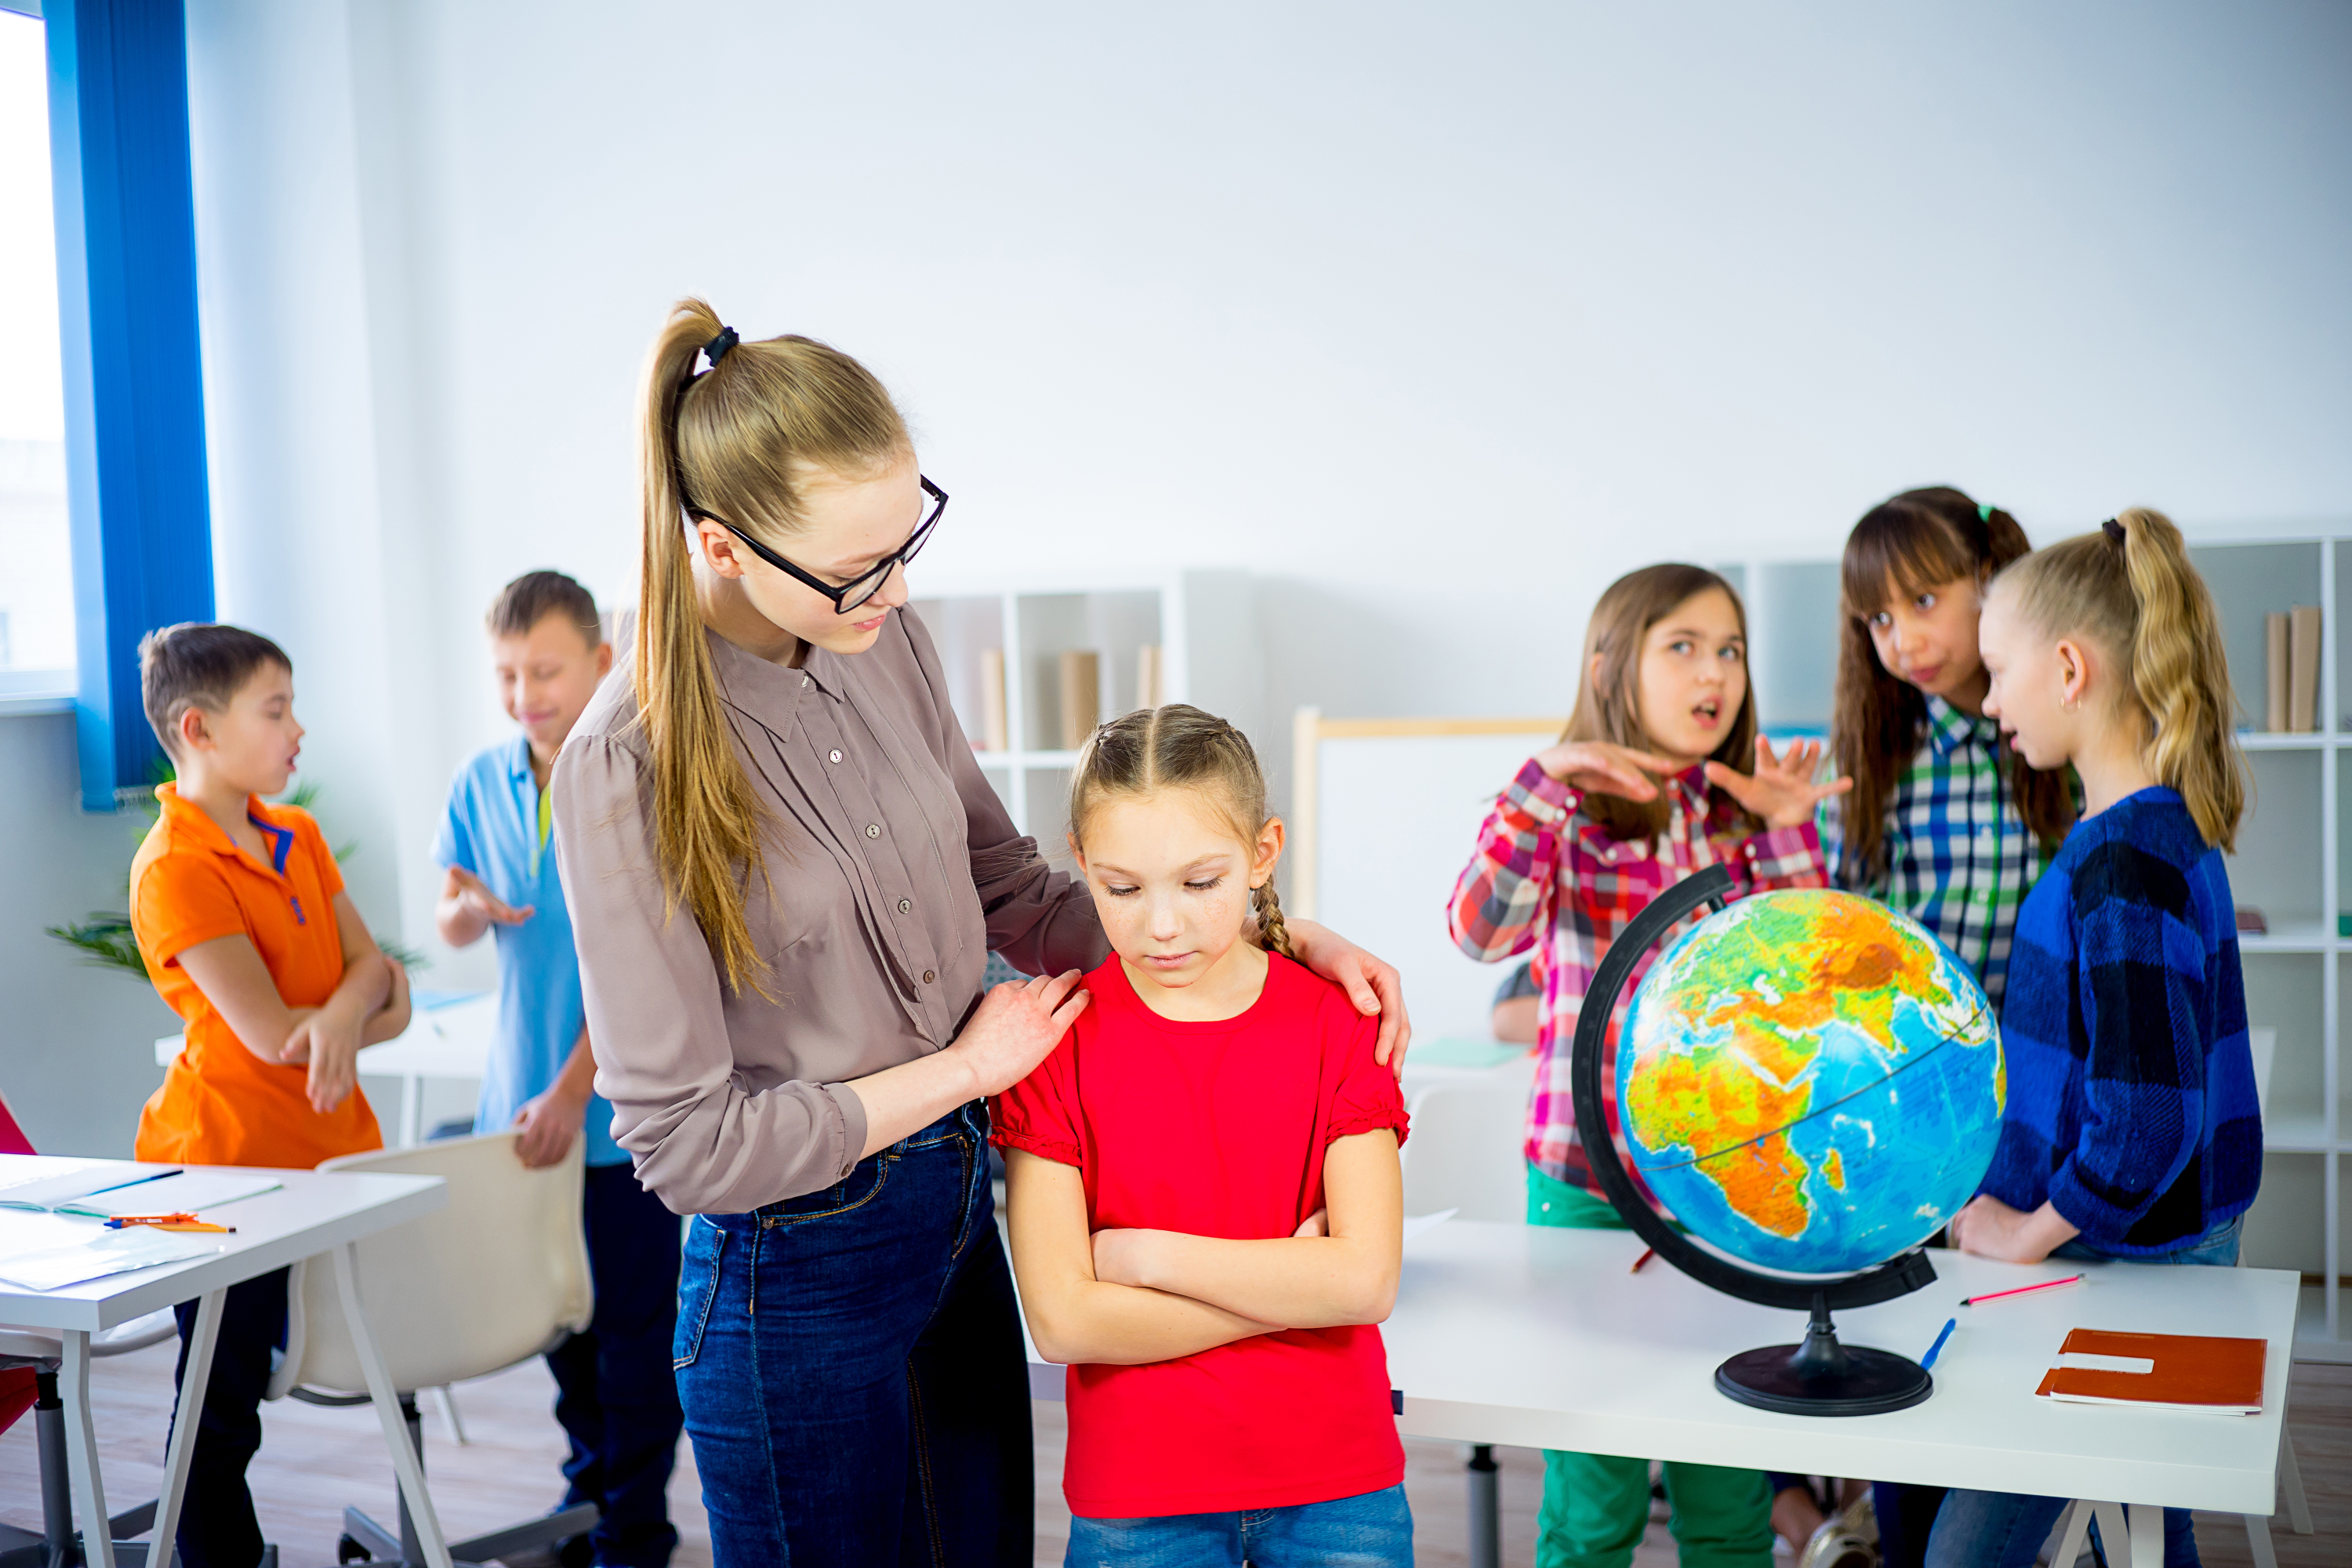 Teacher calms stressed pupil in the classroom as a part of teacher wellbeing